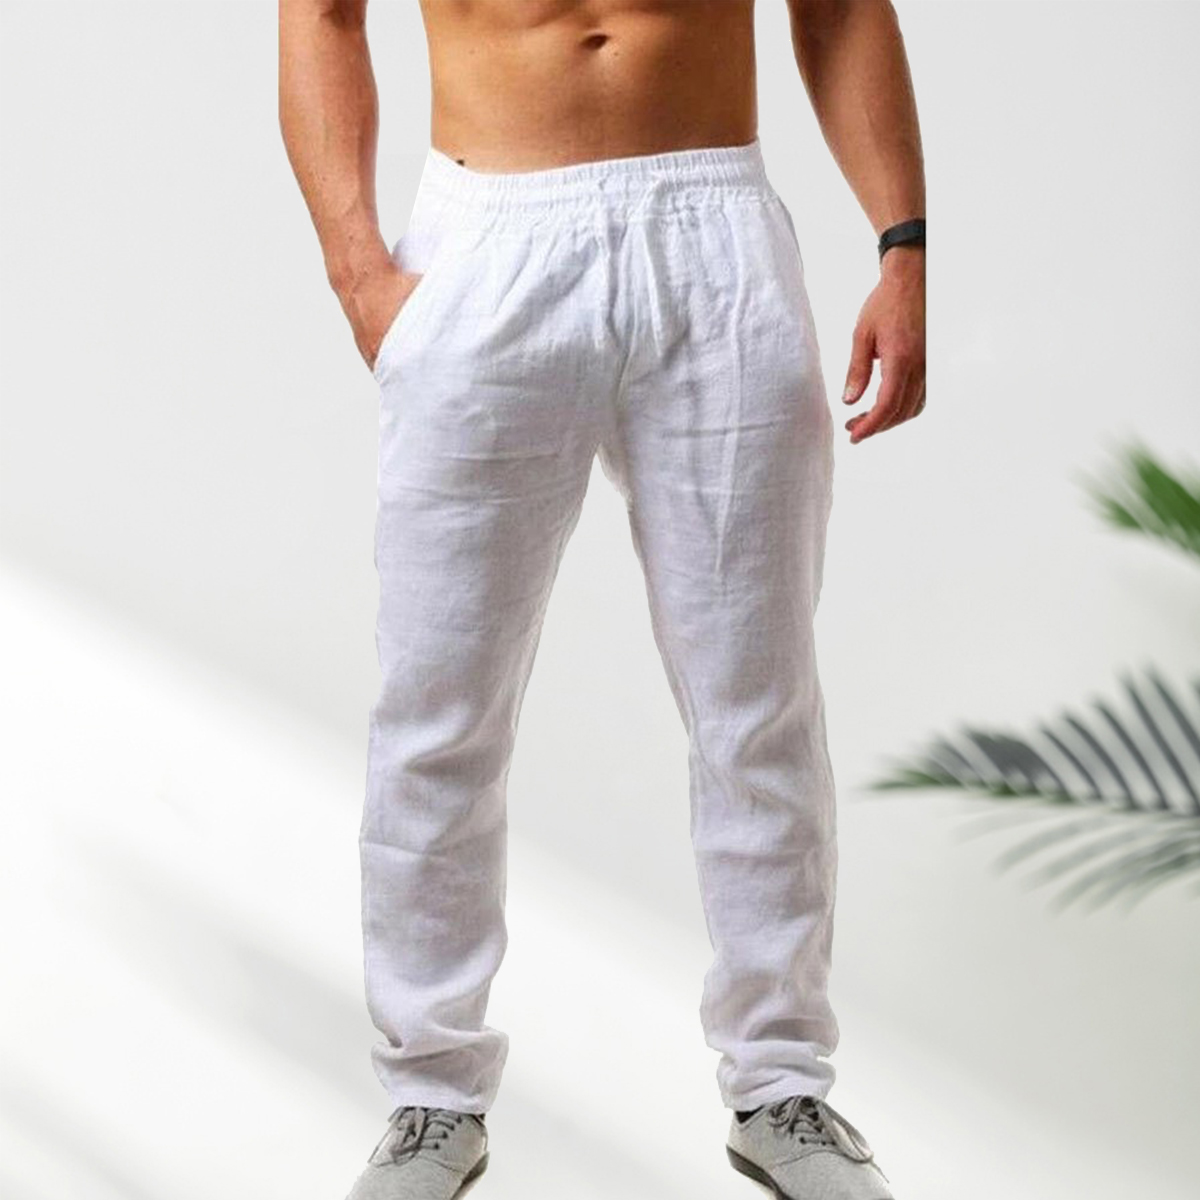 Figcoco Men's New Comfortable Breathable Cotton Linen Solid Color Trou